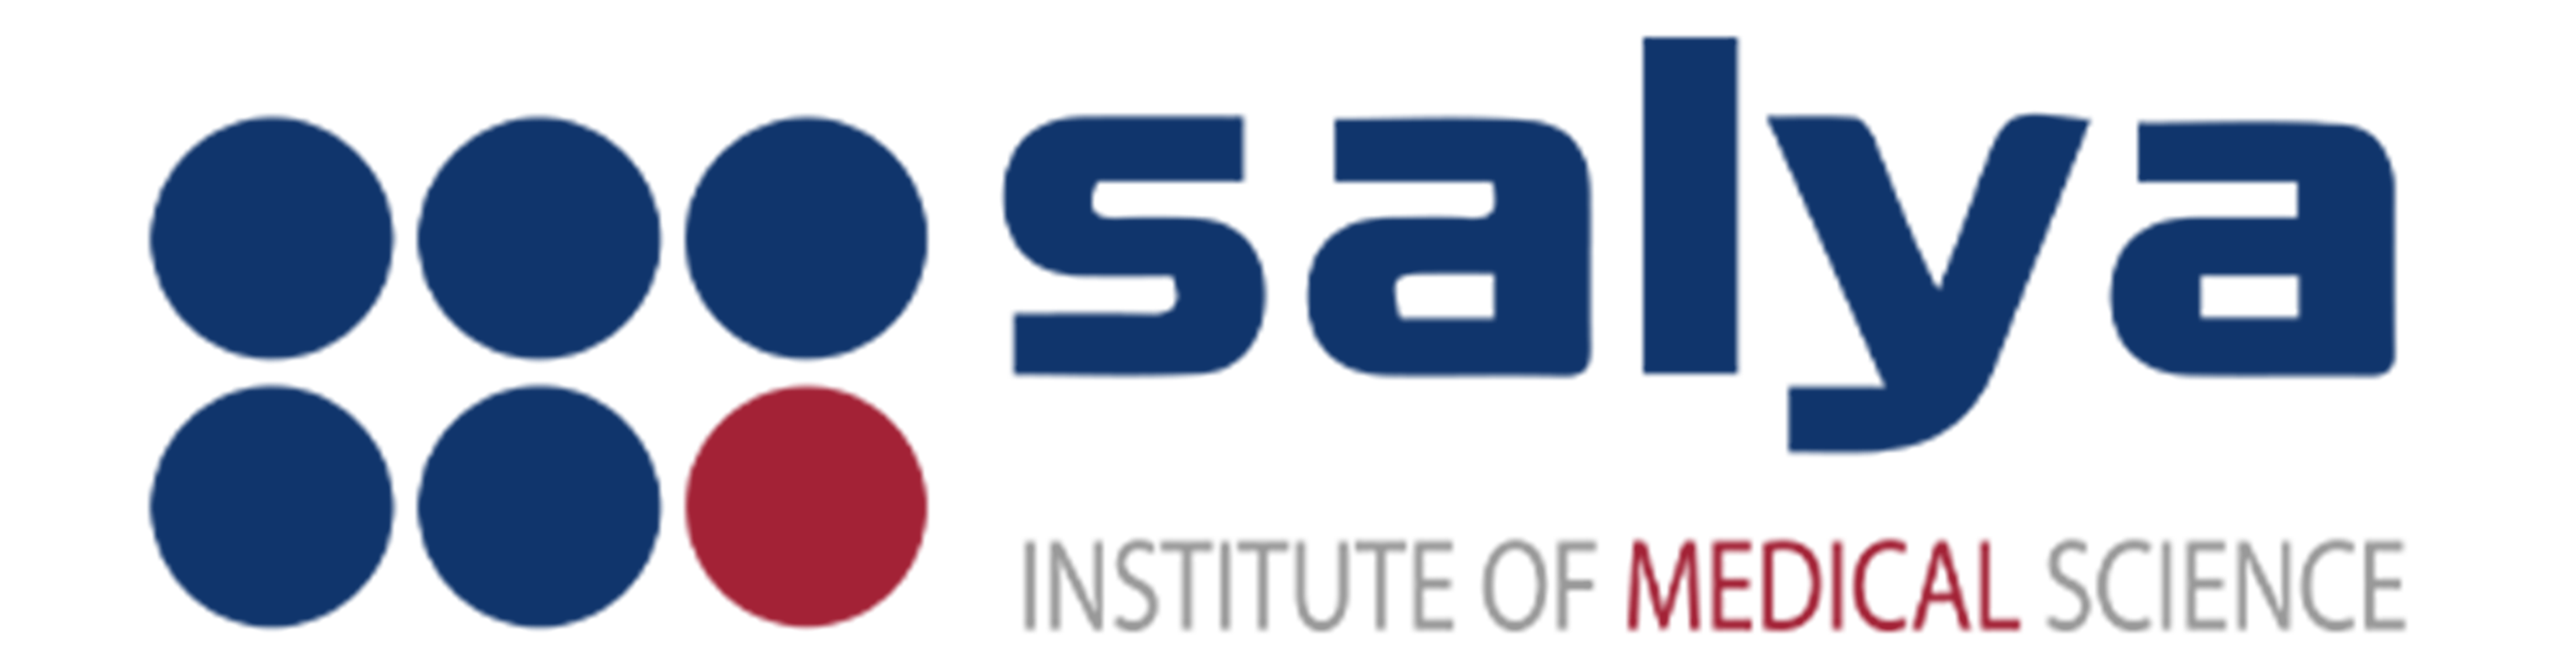 salya institute of medical science